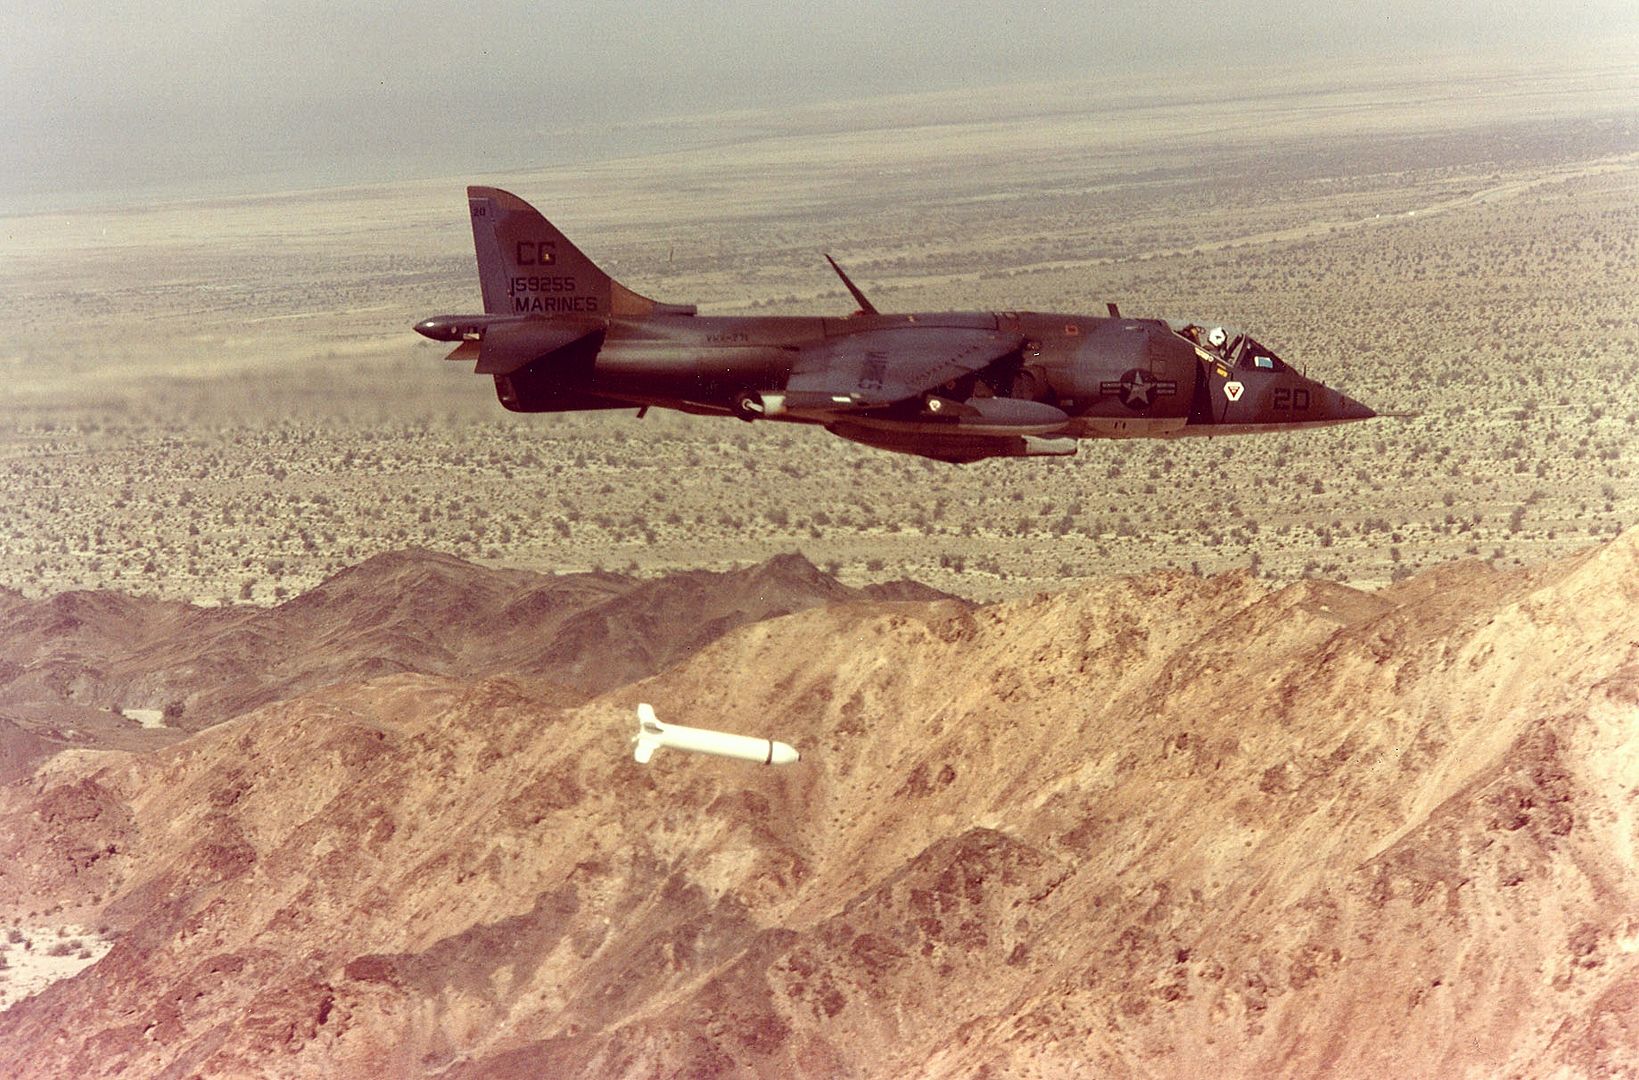 AV-8A_Harrier_of_VMA-231_drops_Rockeye_bomb_in_1979_zpsqojbbqqy.jpg